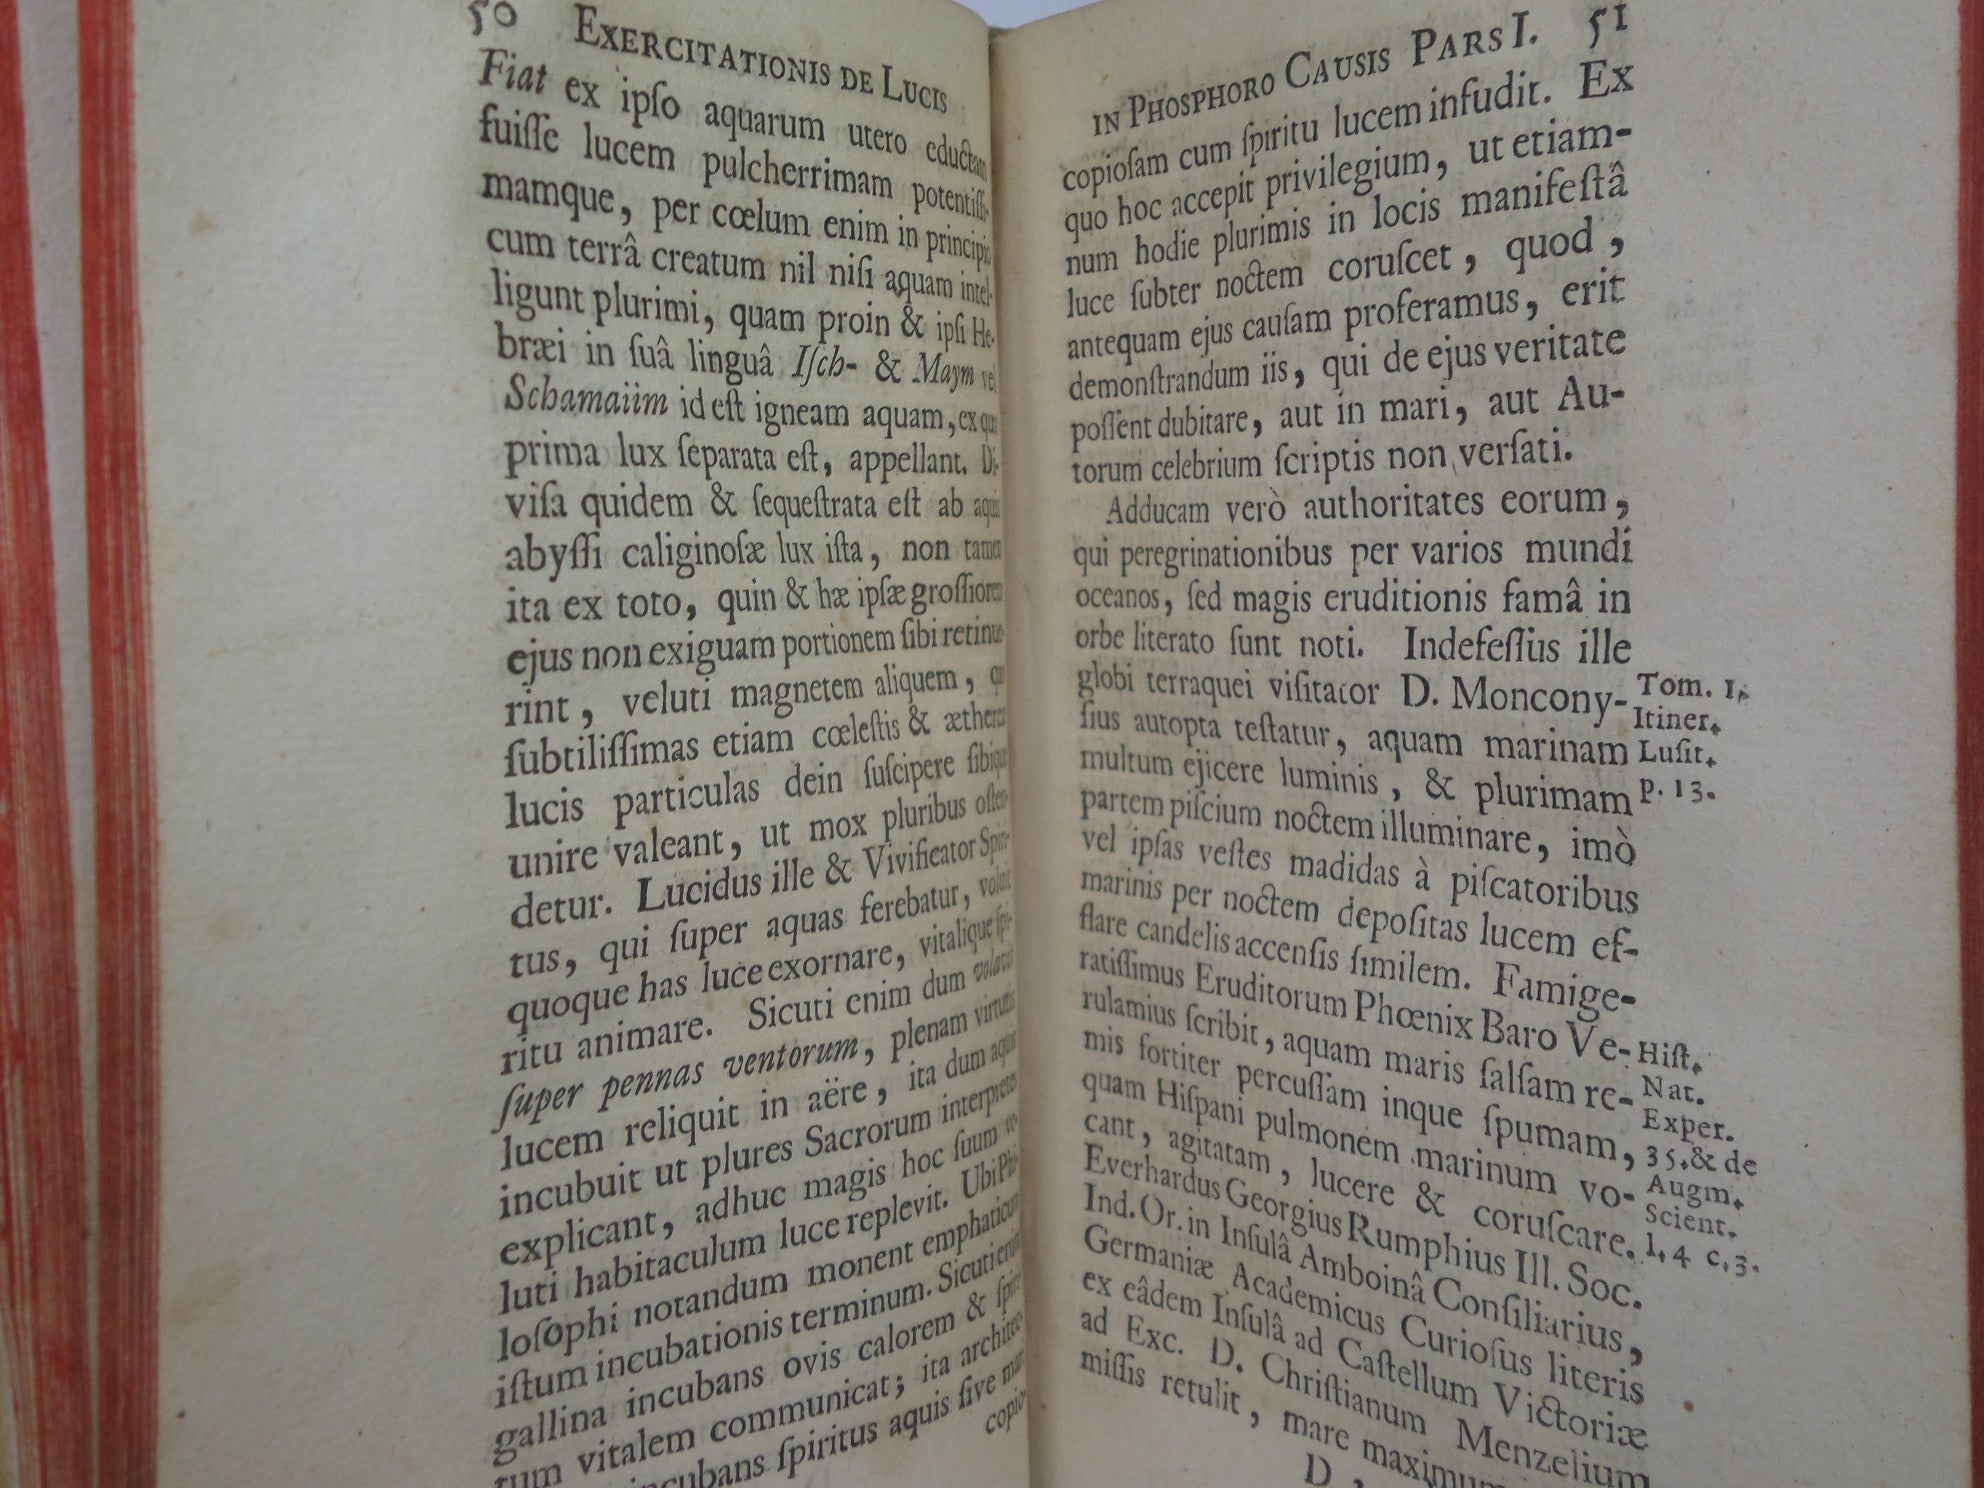 LUMEN NOVUM PHOSPHORIS ACCENSUM SIVE EXERCITATIO PHYSICO-CHYMICA BY JOHANN HENRICH COHAUSEN 1717 FIRST EDITION